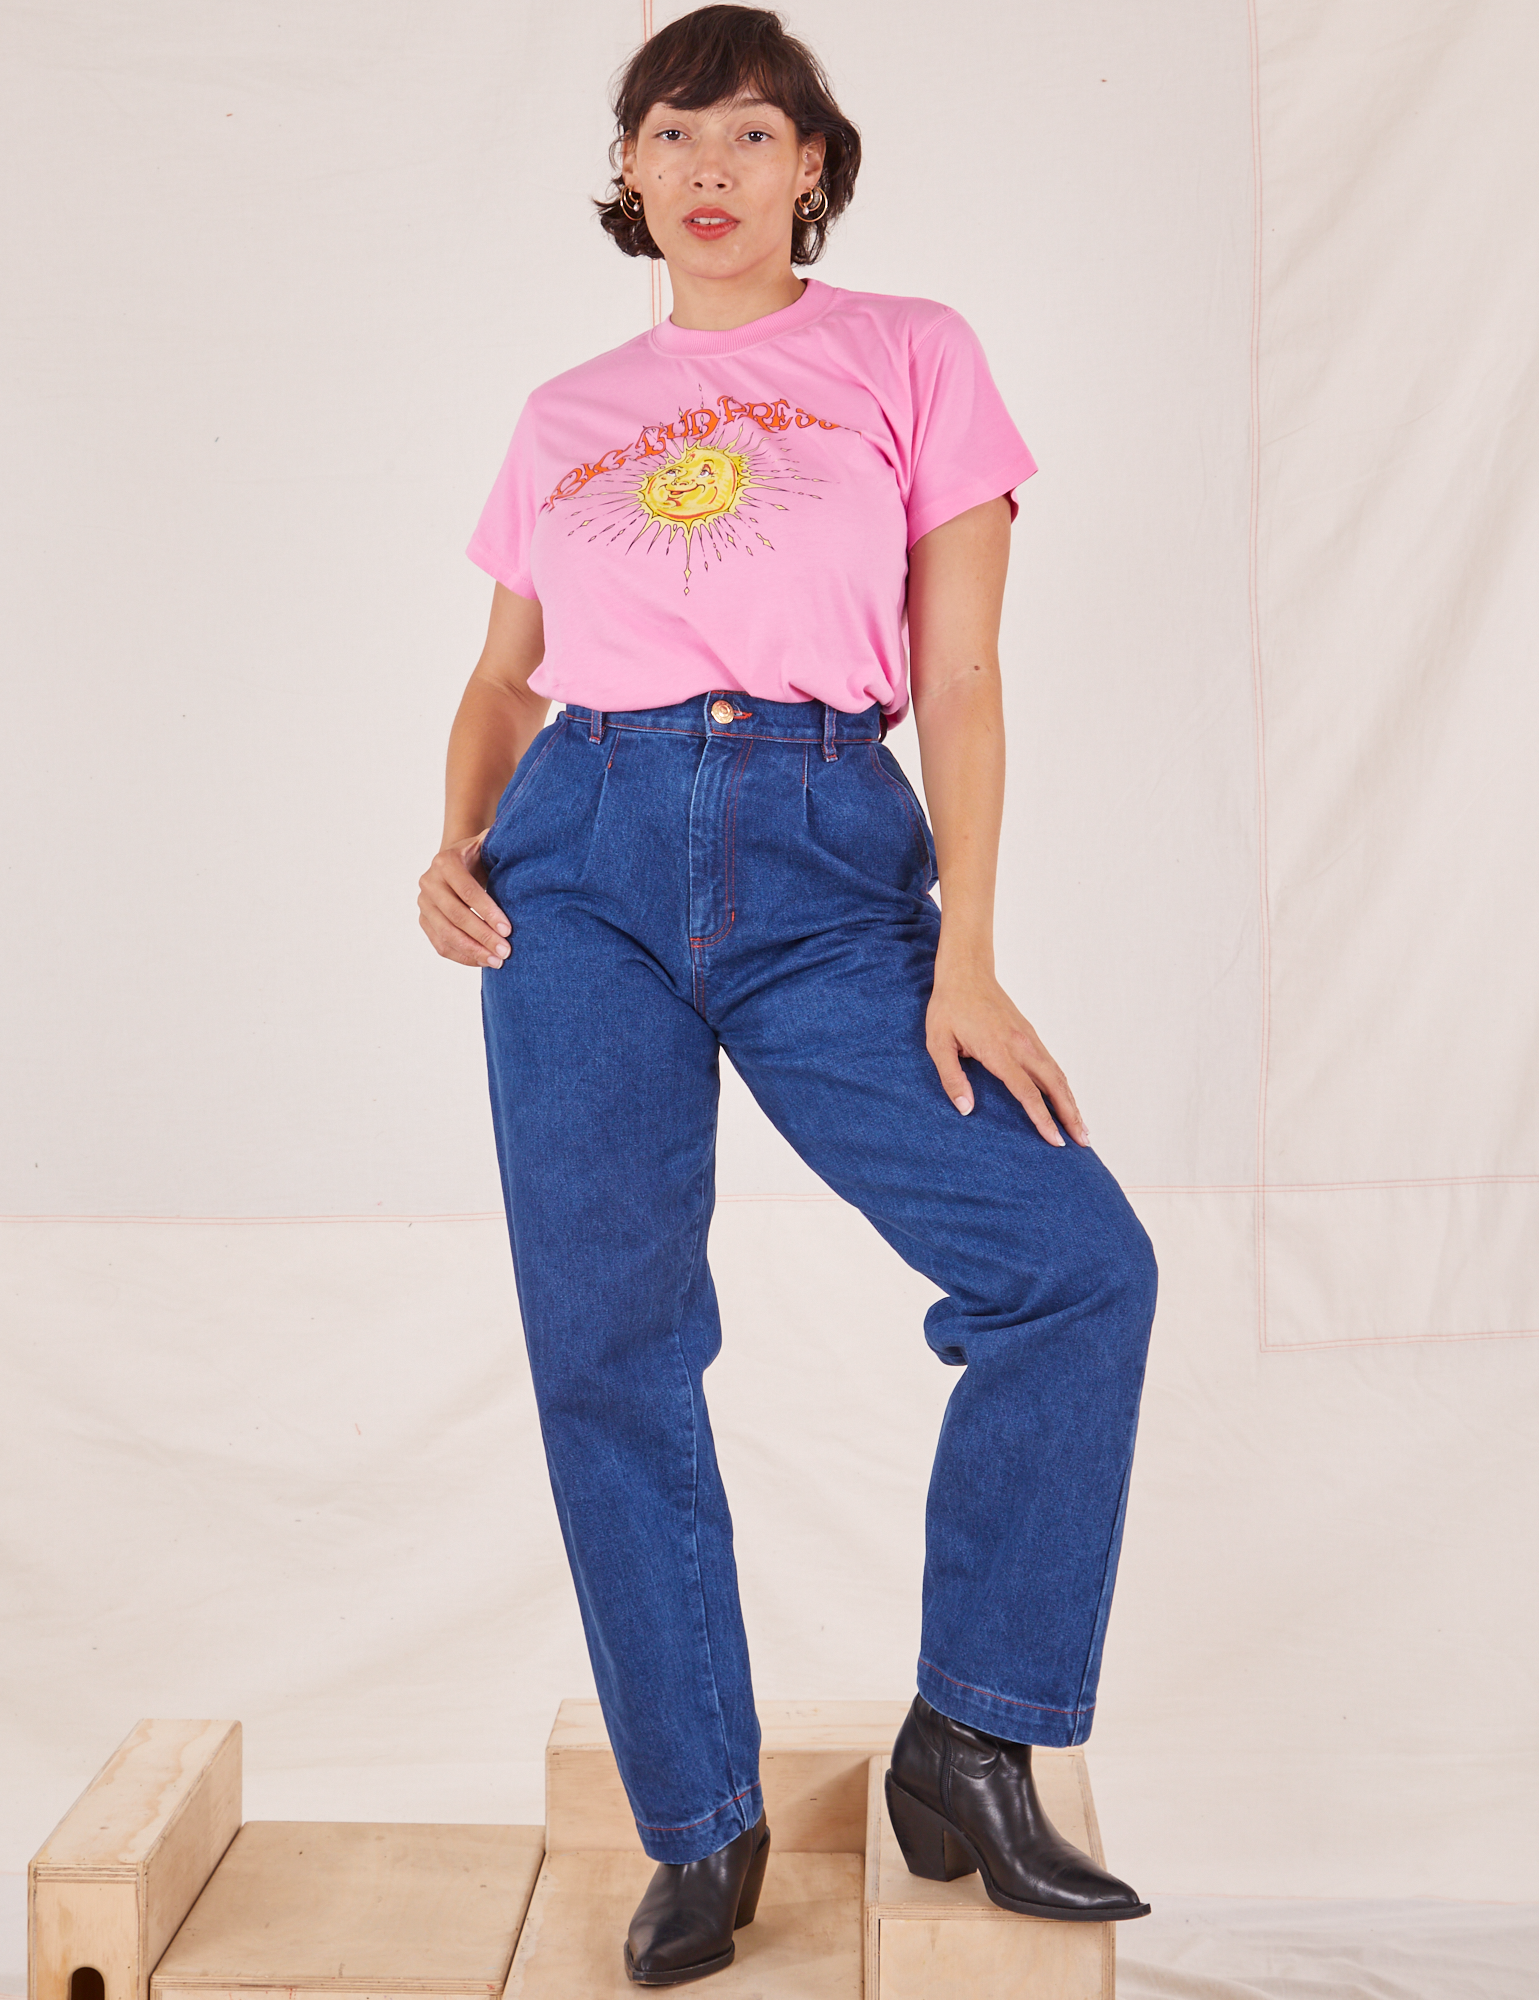 Tiara is wearing Sun Baby Organic Tee in Bubblegum Pink and dark denim Trouser Jeans